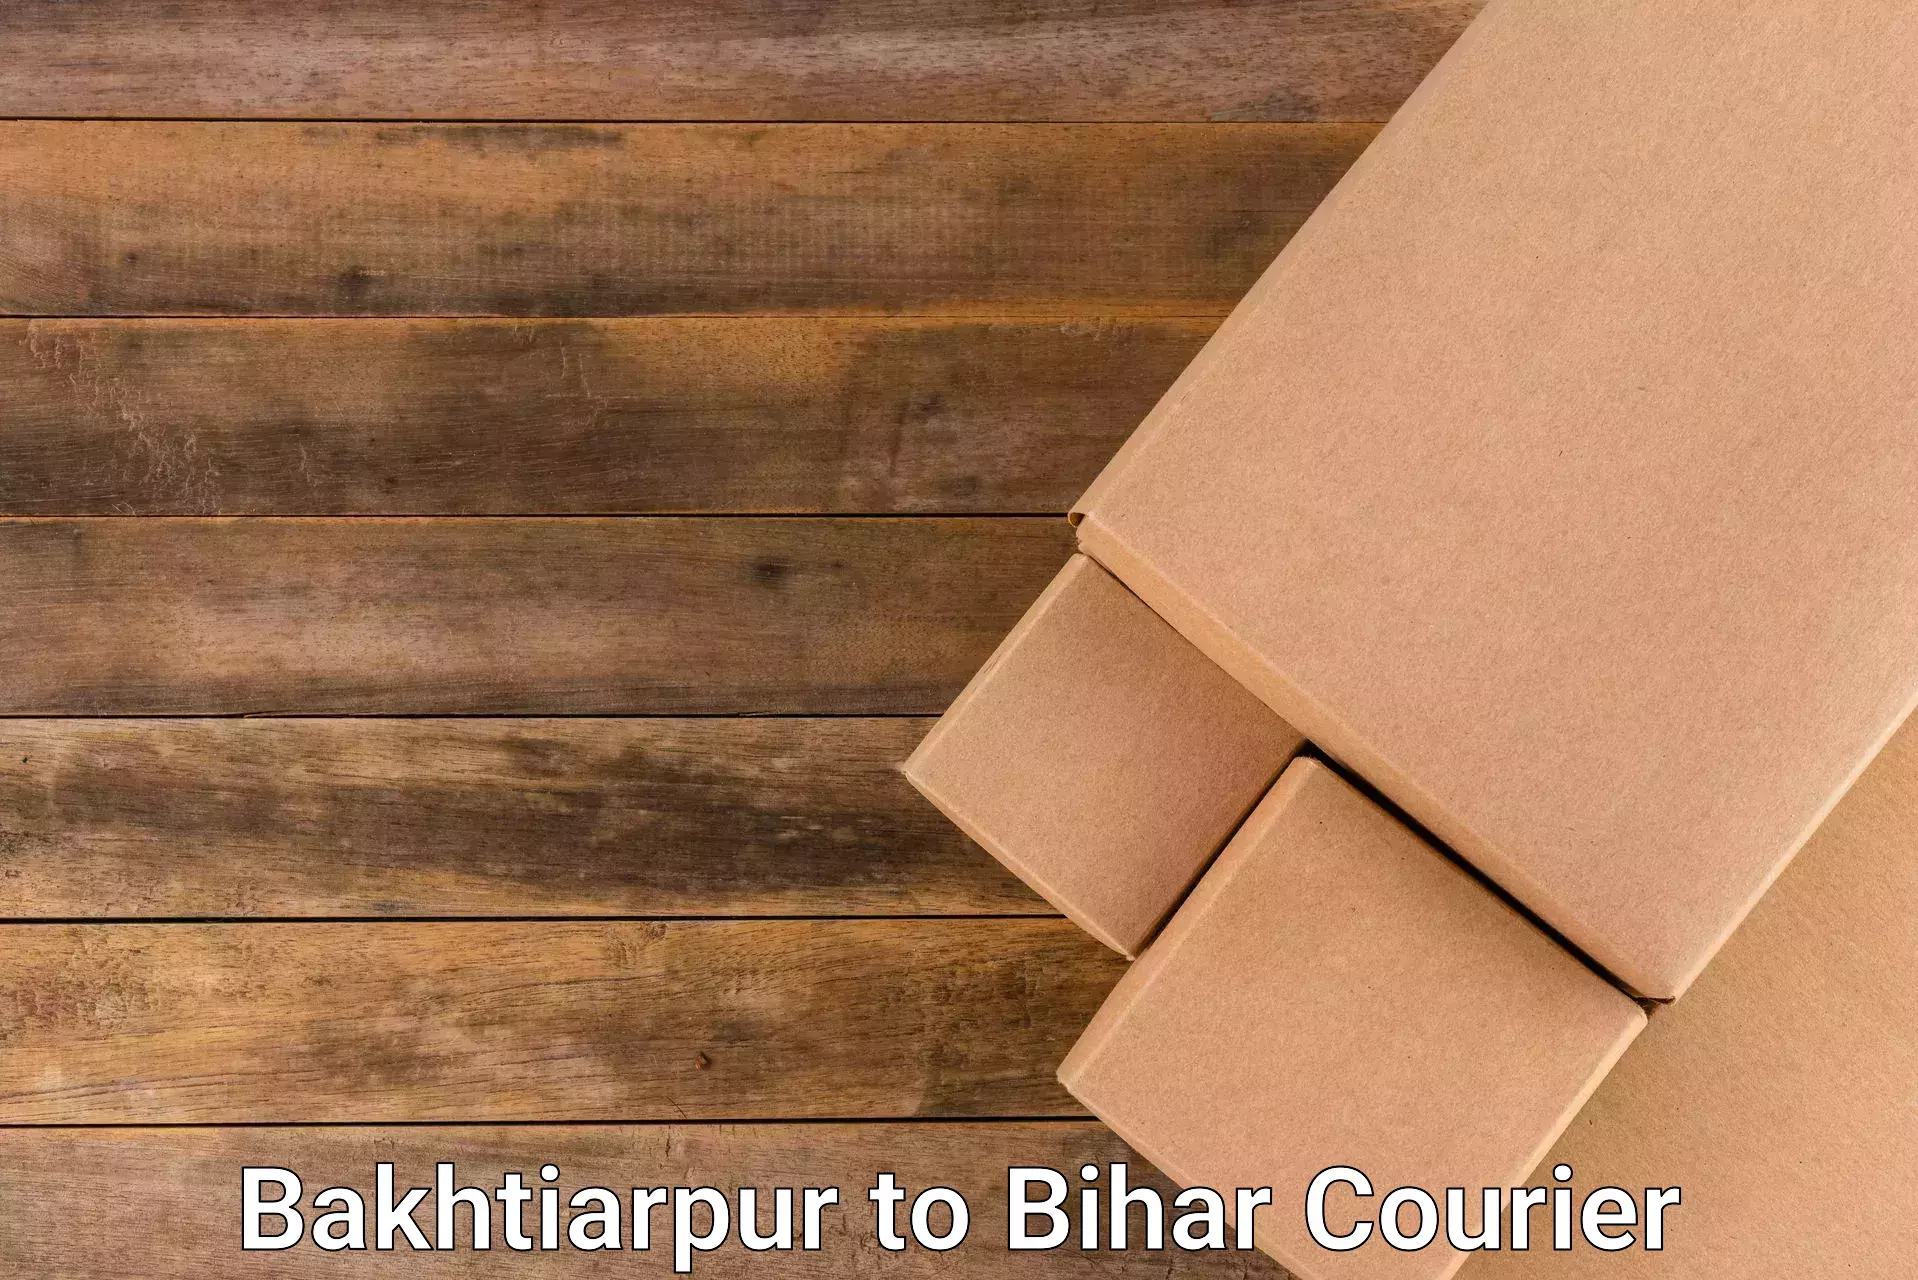 High-capacity parcel service Bakhtiarpur to Piro